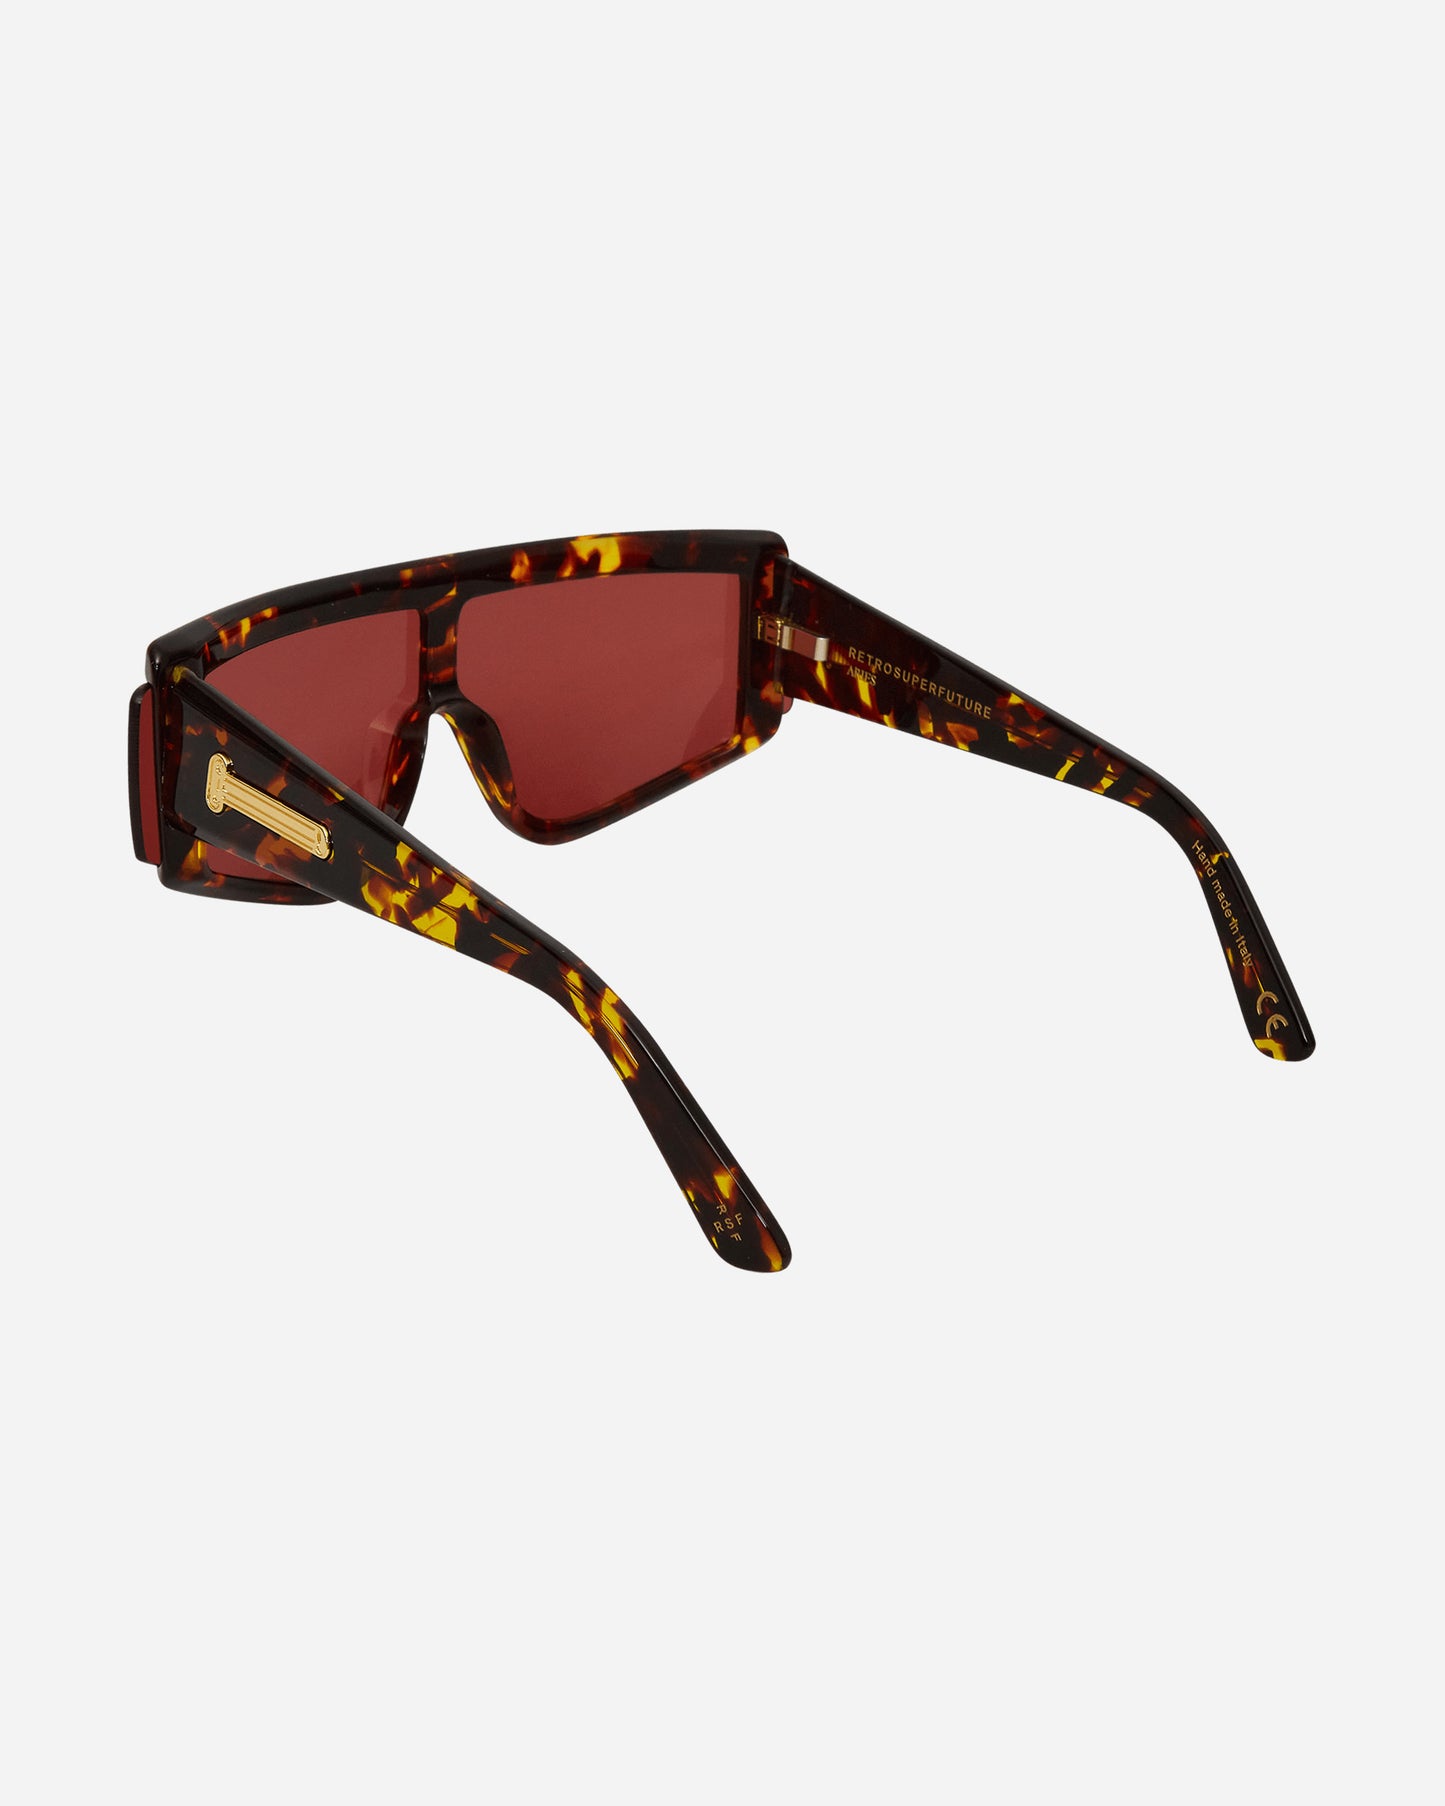 Aries Zed  Havana Havana Eyewear Sunglasses RSAR90000 HVN